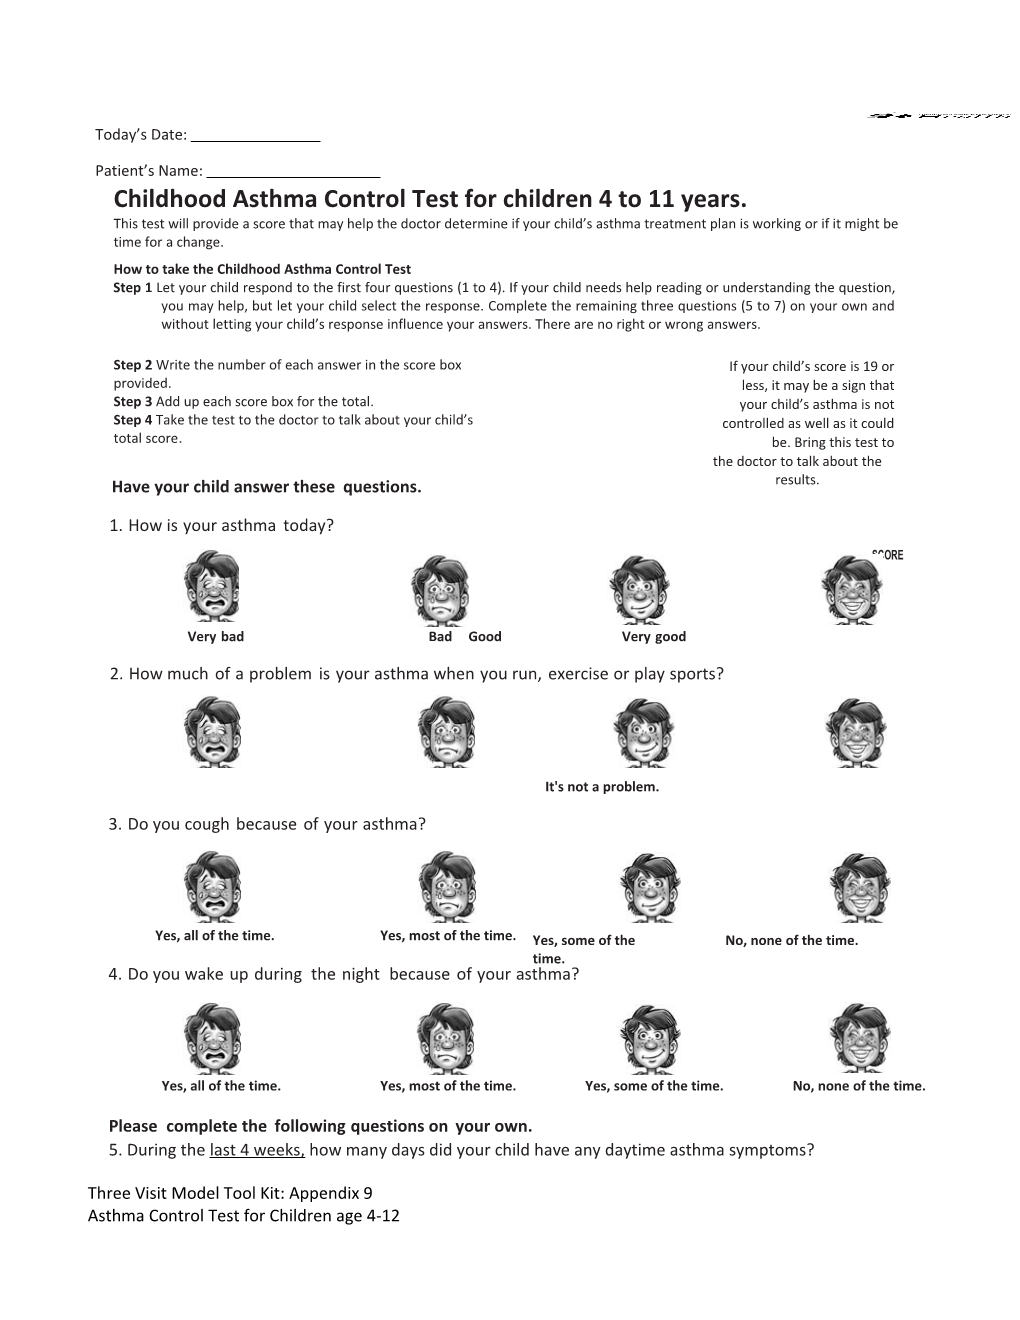 Childhood Asthma Control Testfor Children 4To11 Years